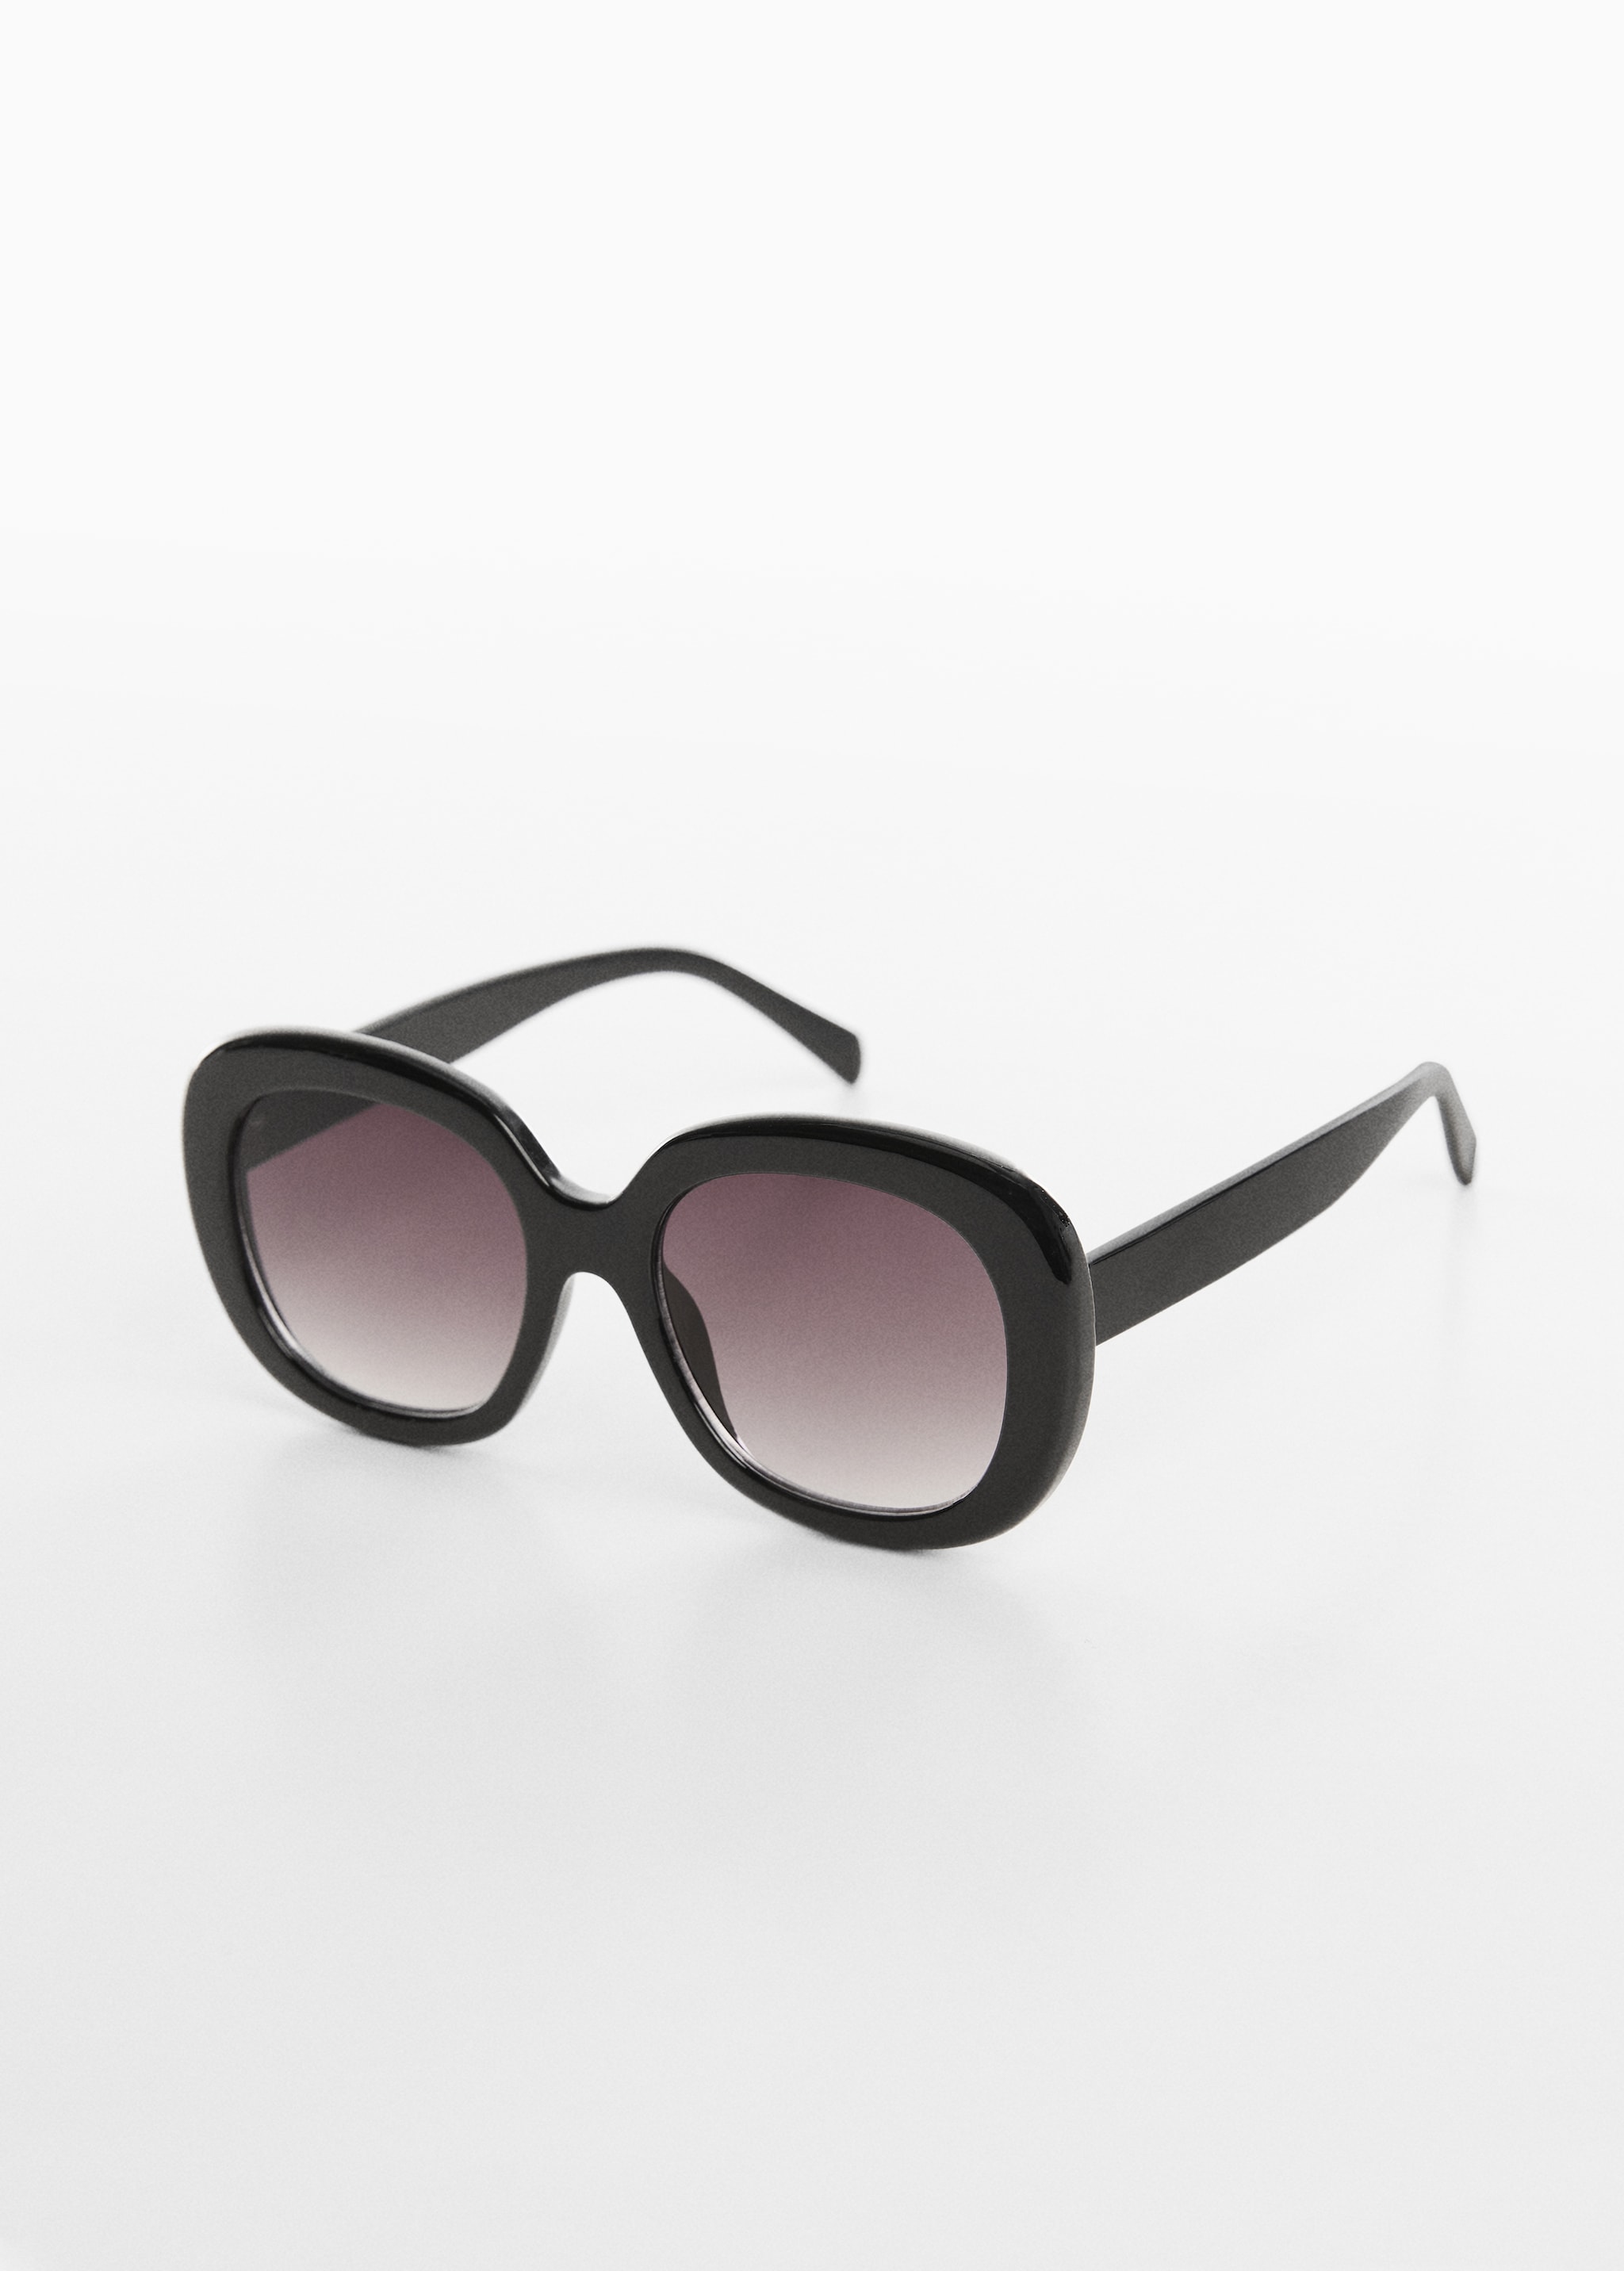 Maxi-frame sunglasses - Medium plane